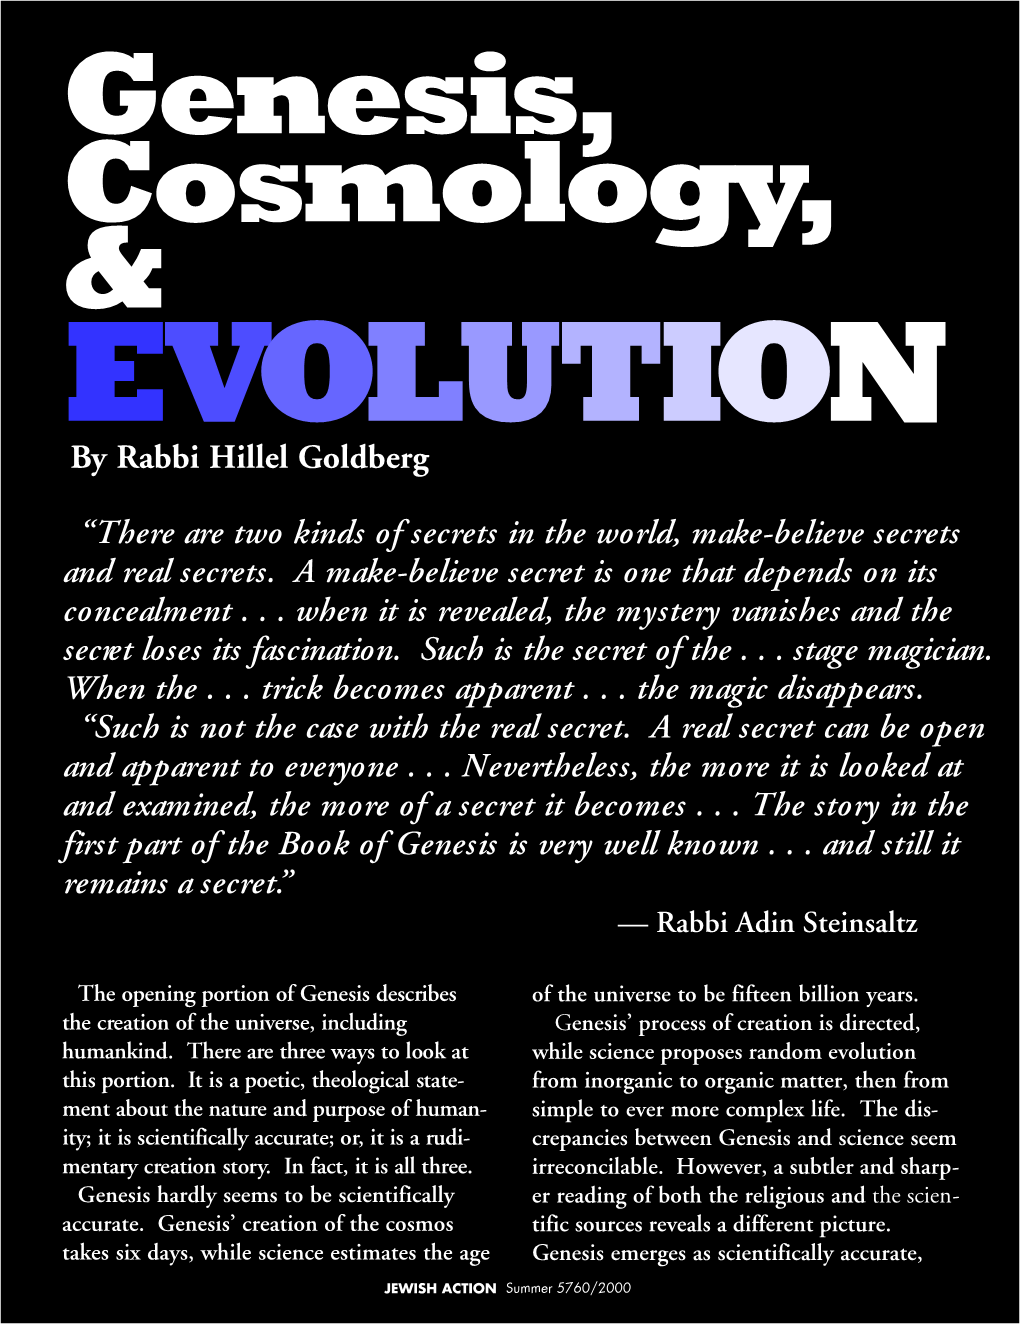 Genesis, Cosmology, and Evolution